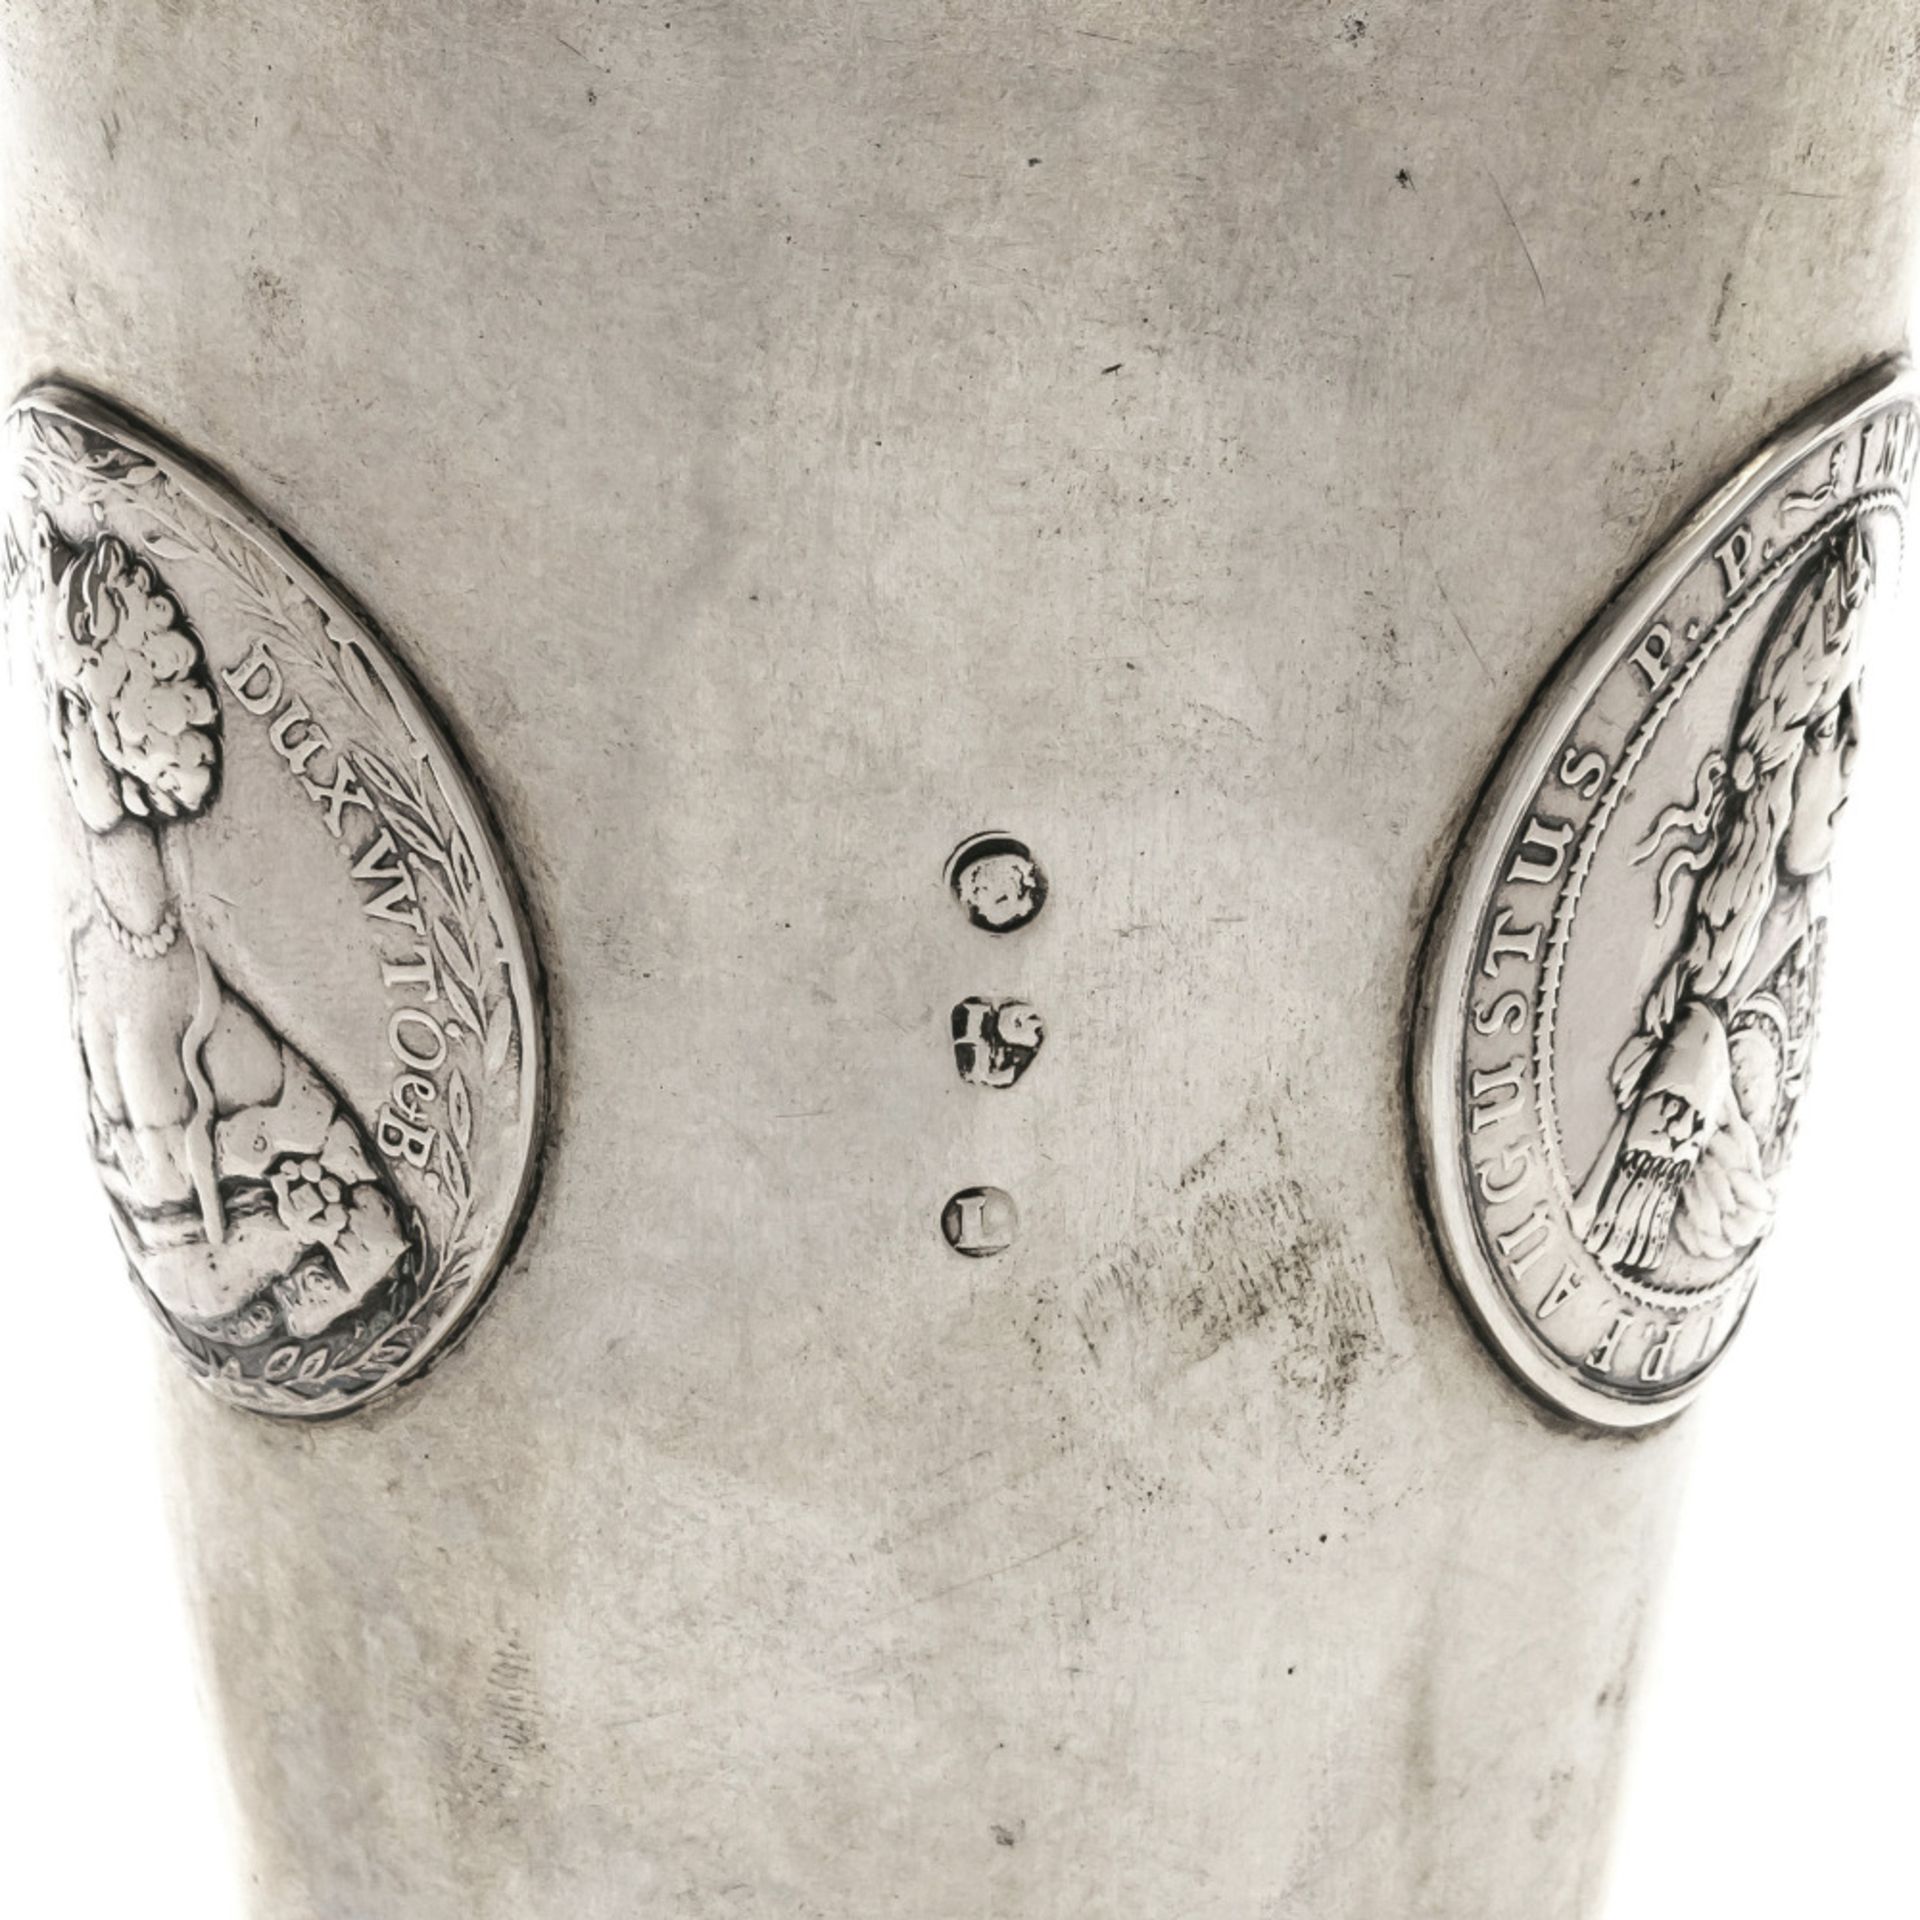 A cup with cover - Breslau, 1793 - 1796, Joseph Gottlieb Lederhose - Image 2 of 3